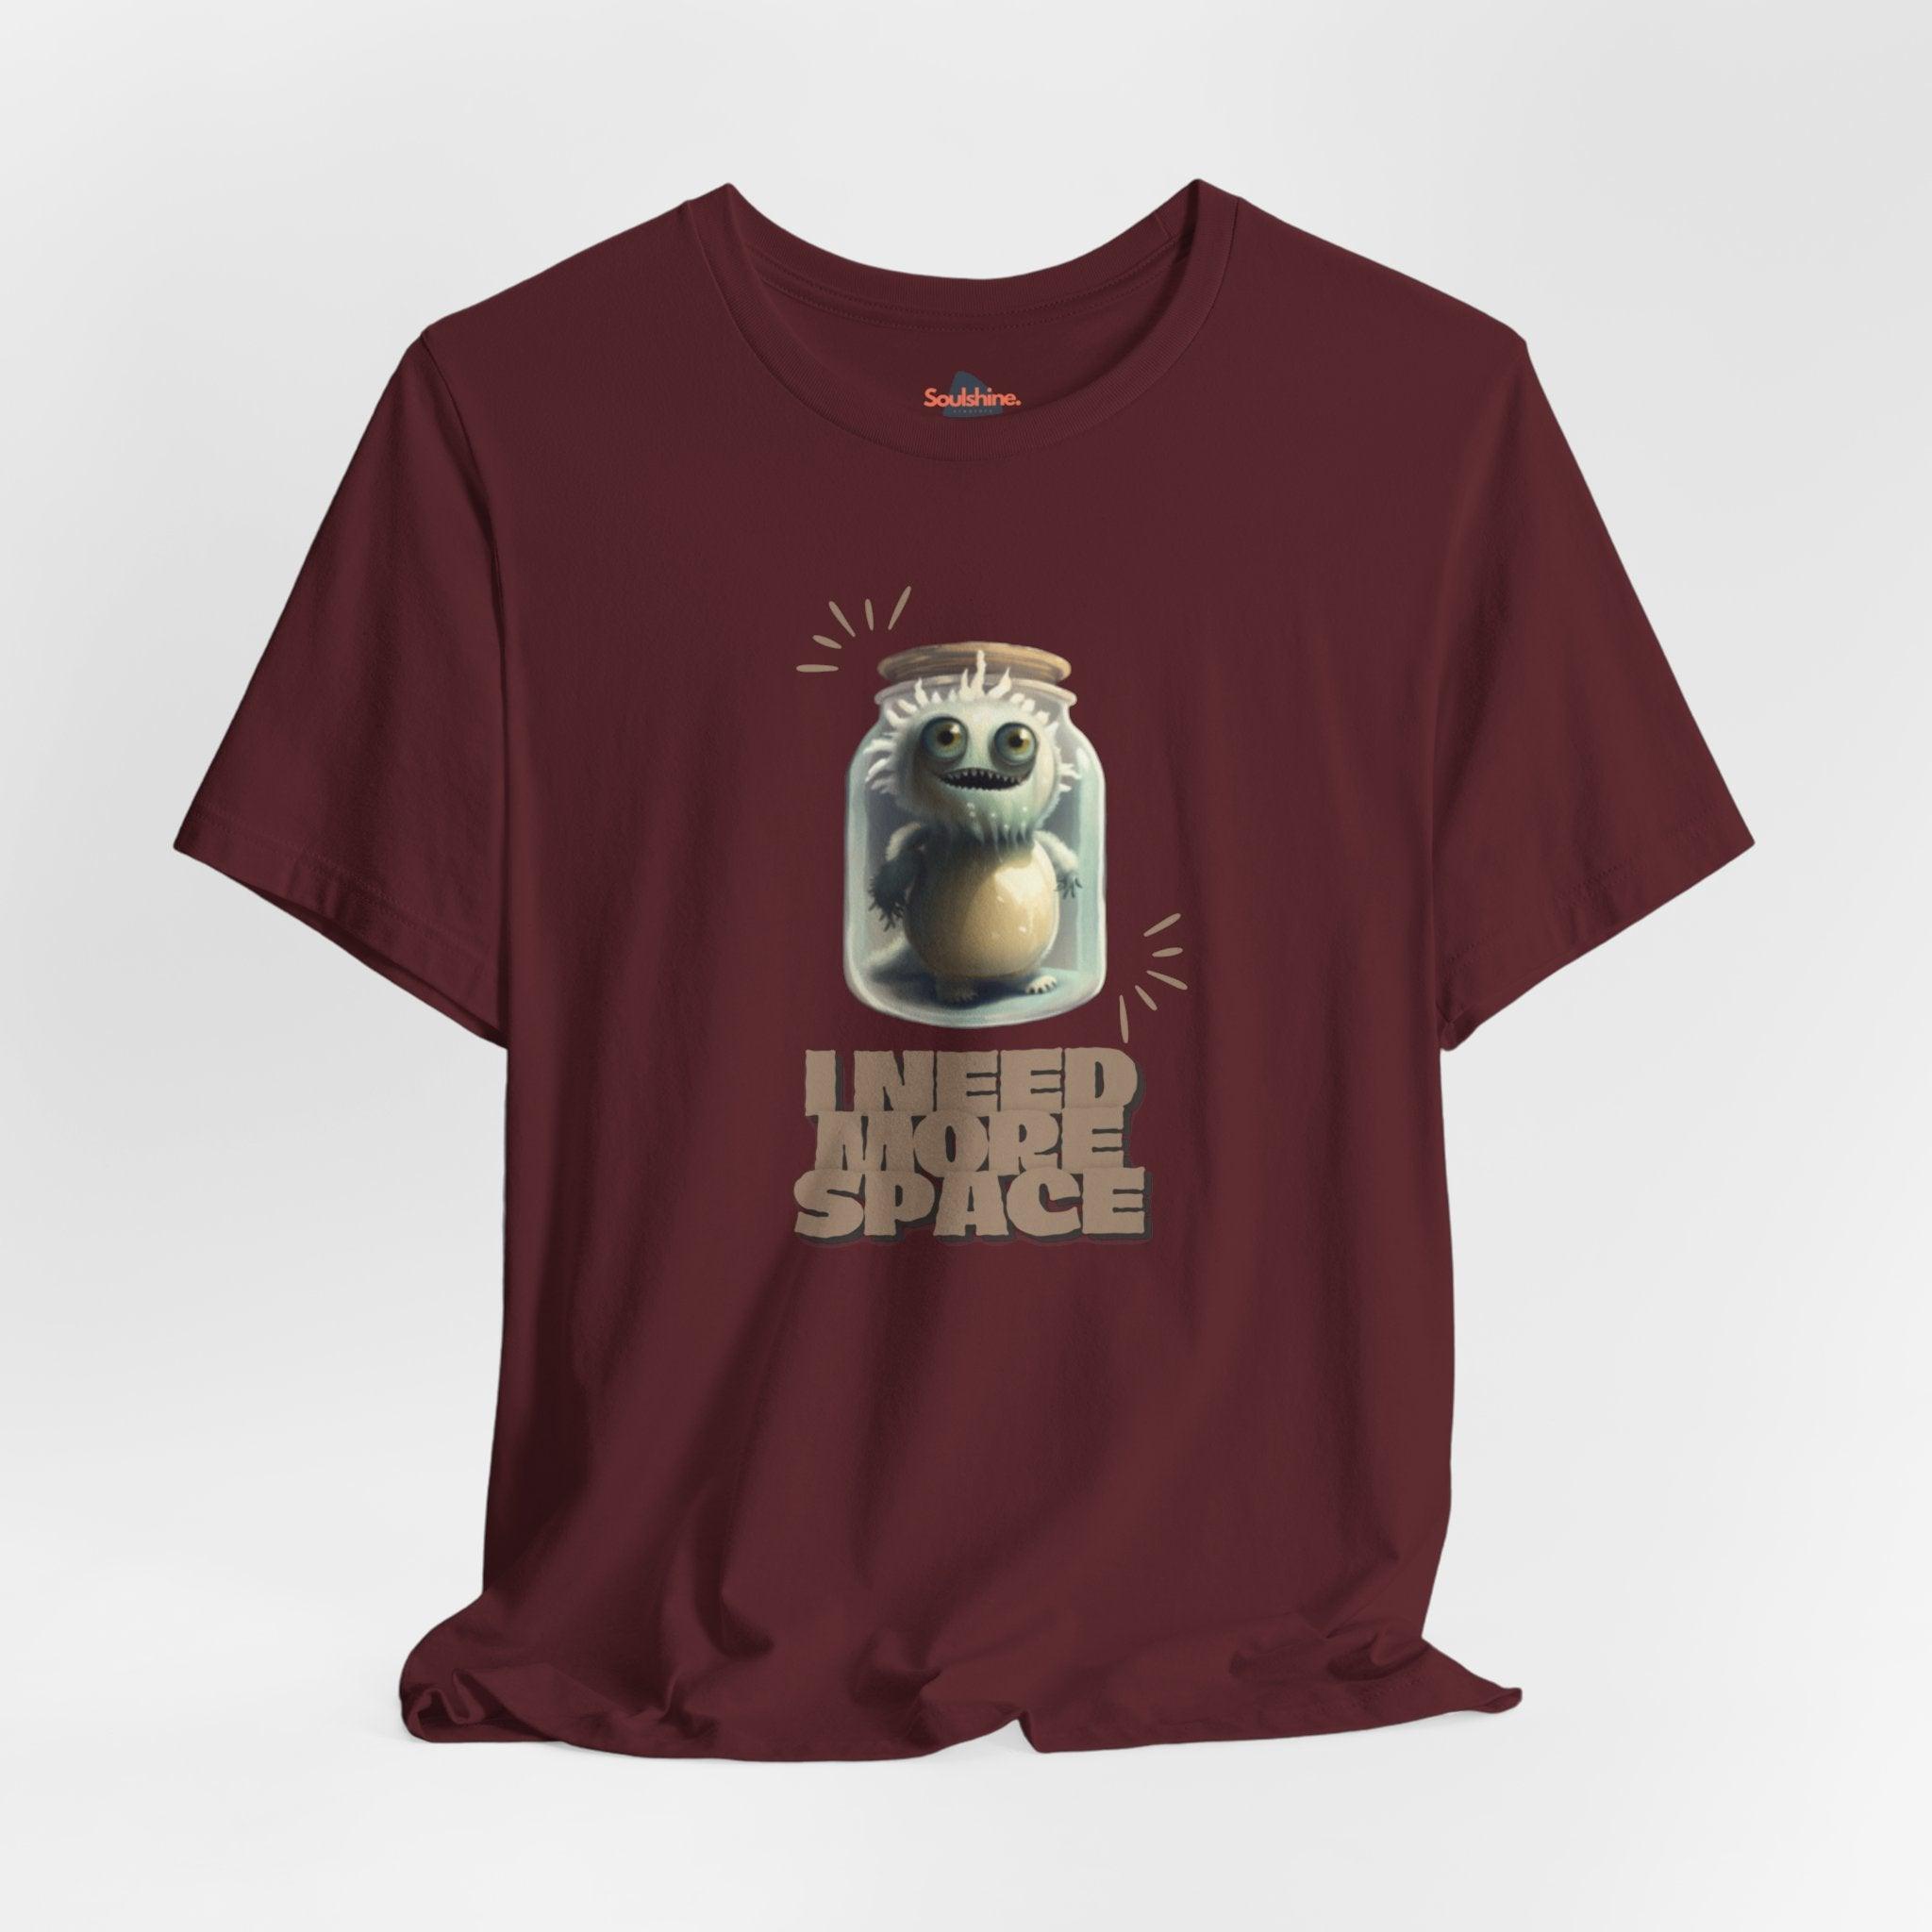 I need more space - Funny T-Shirt - Unisex Jersey Short Sleeve Tee - US Maroon S T-Shirt by Soulshinecreators | Soulshinecreators